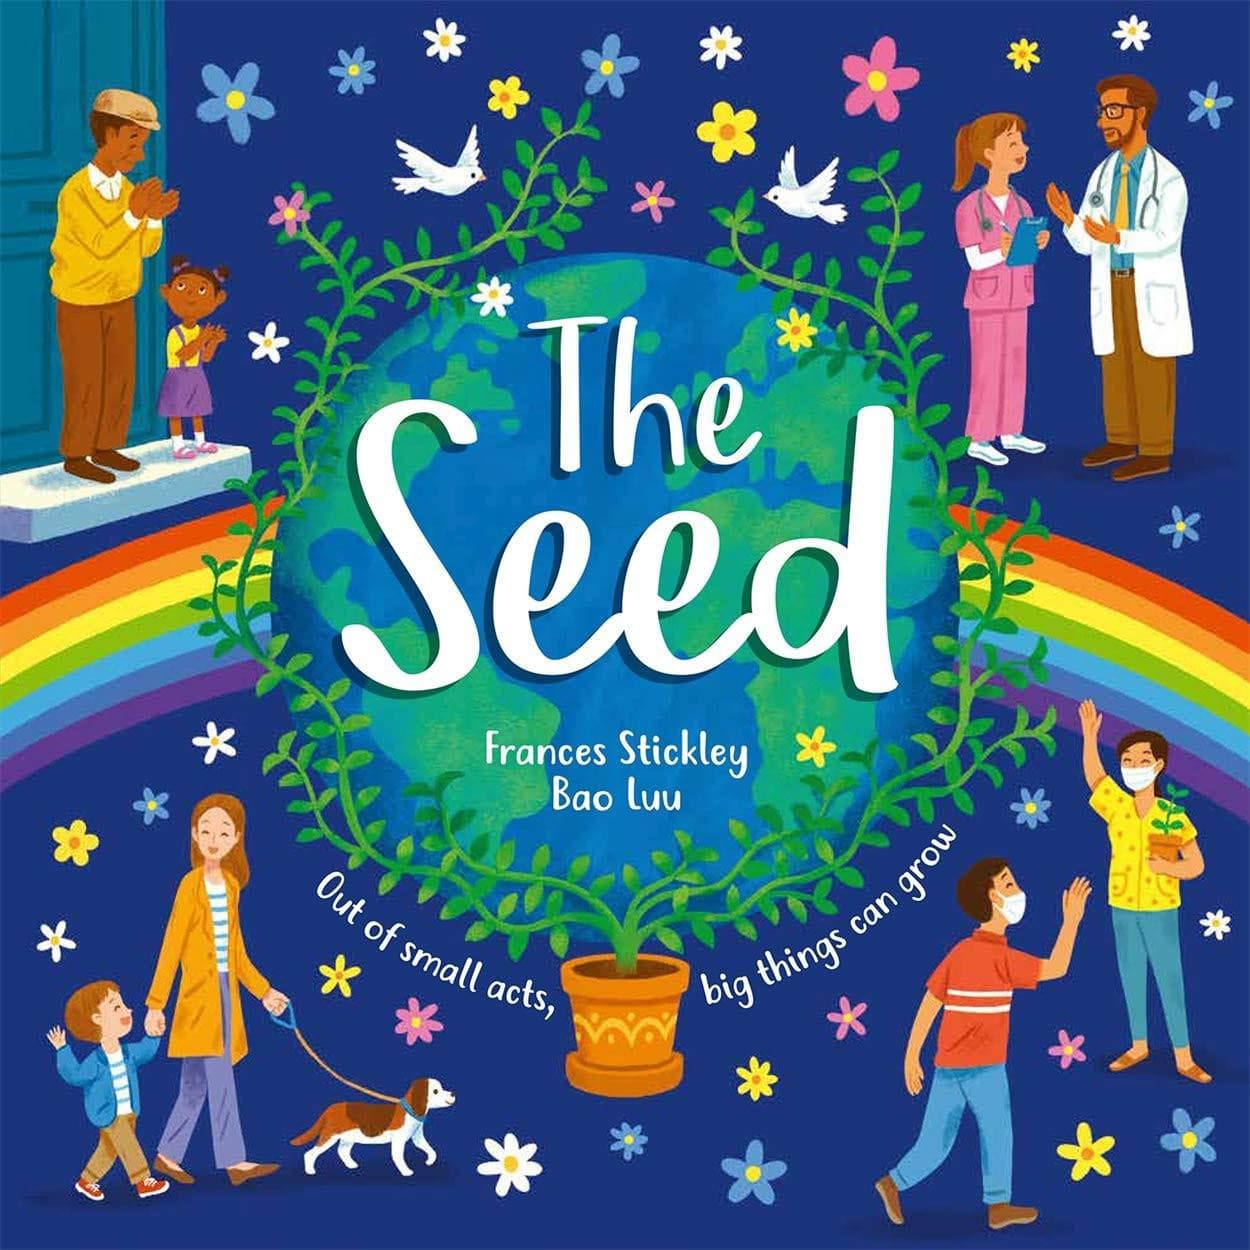 The Seed - Frances Stickley & Bao Luu